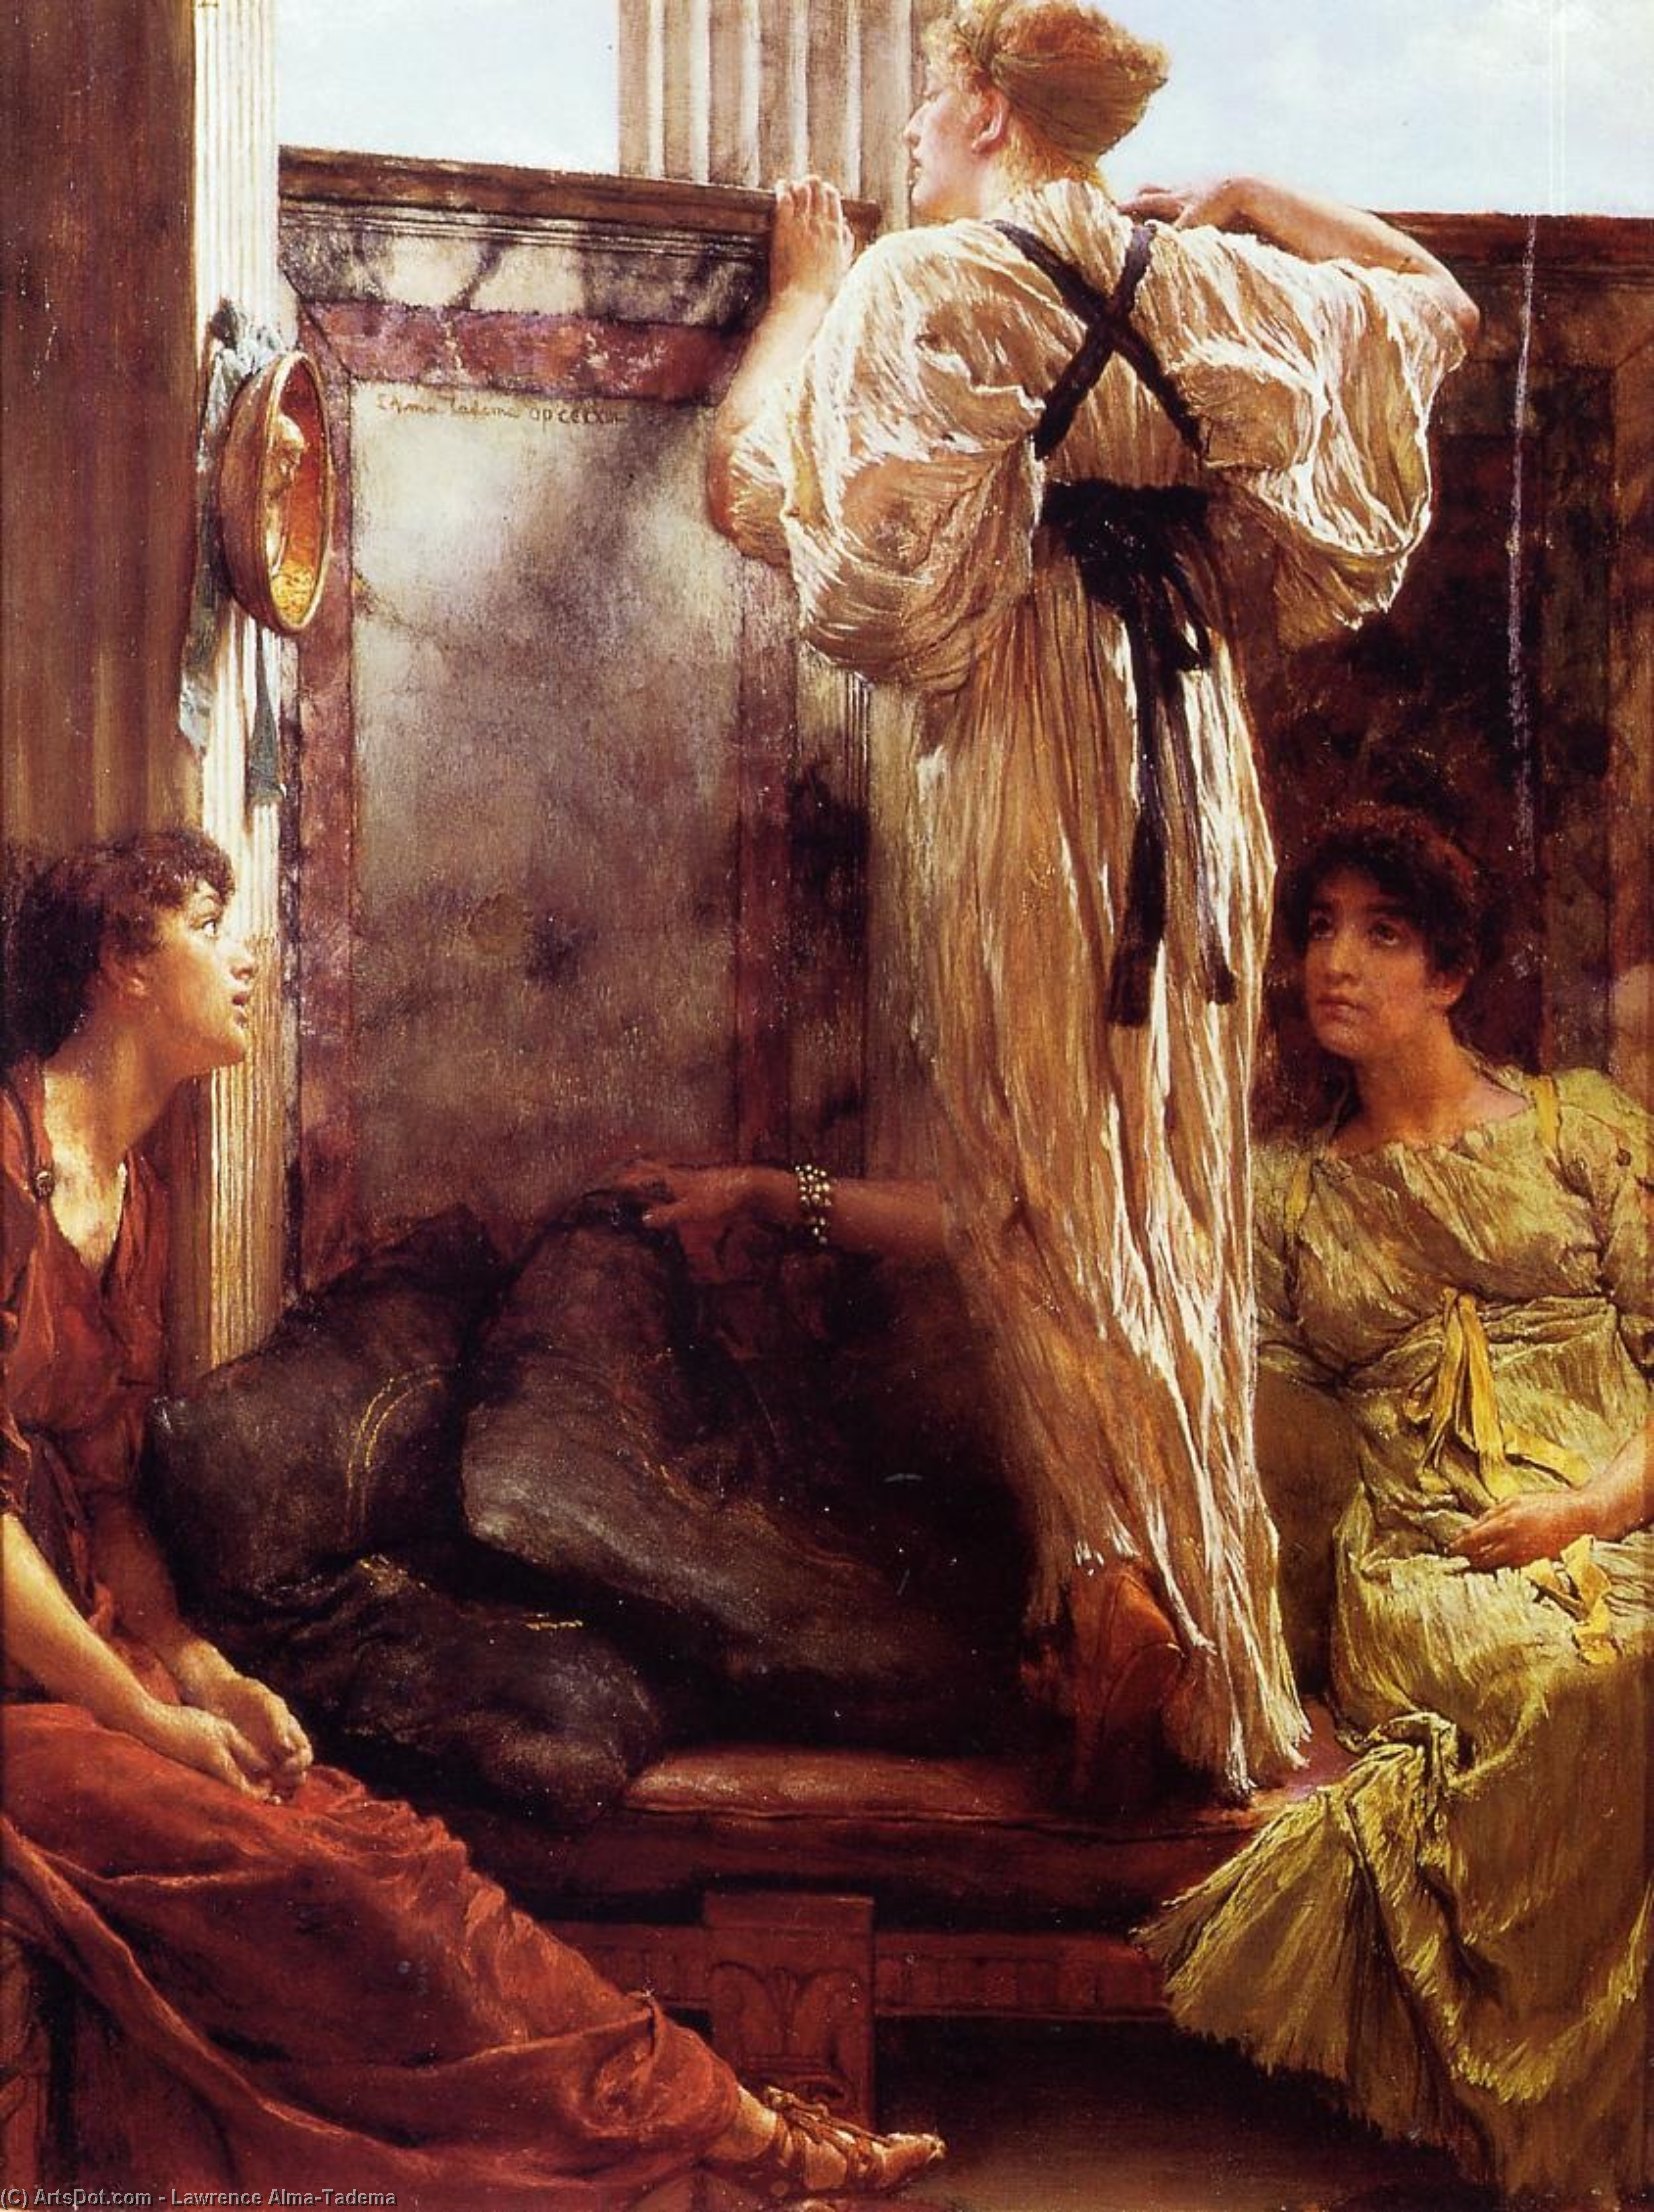 Buy Museum Art Reproductions Who is It by Lawrence Alma-Tadema | ArtsDot.com